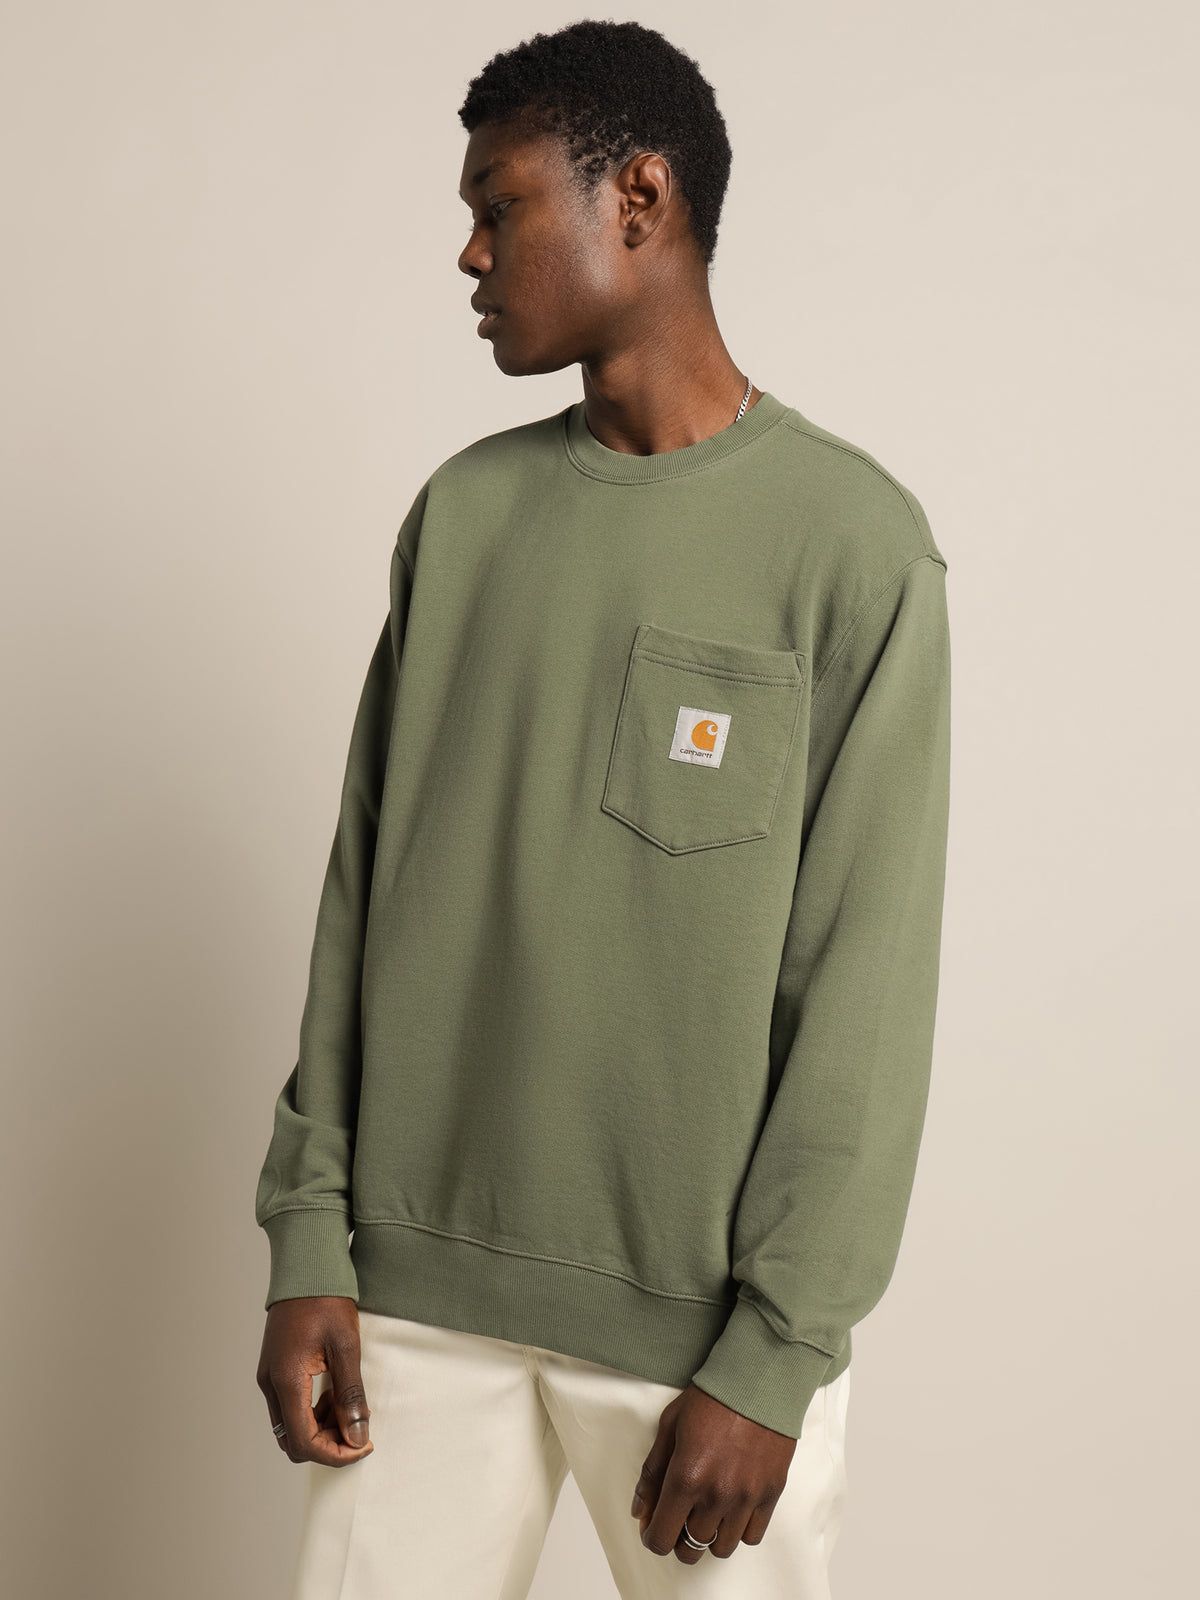 Pocket Sweatshirt in Dollar Green